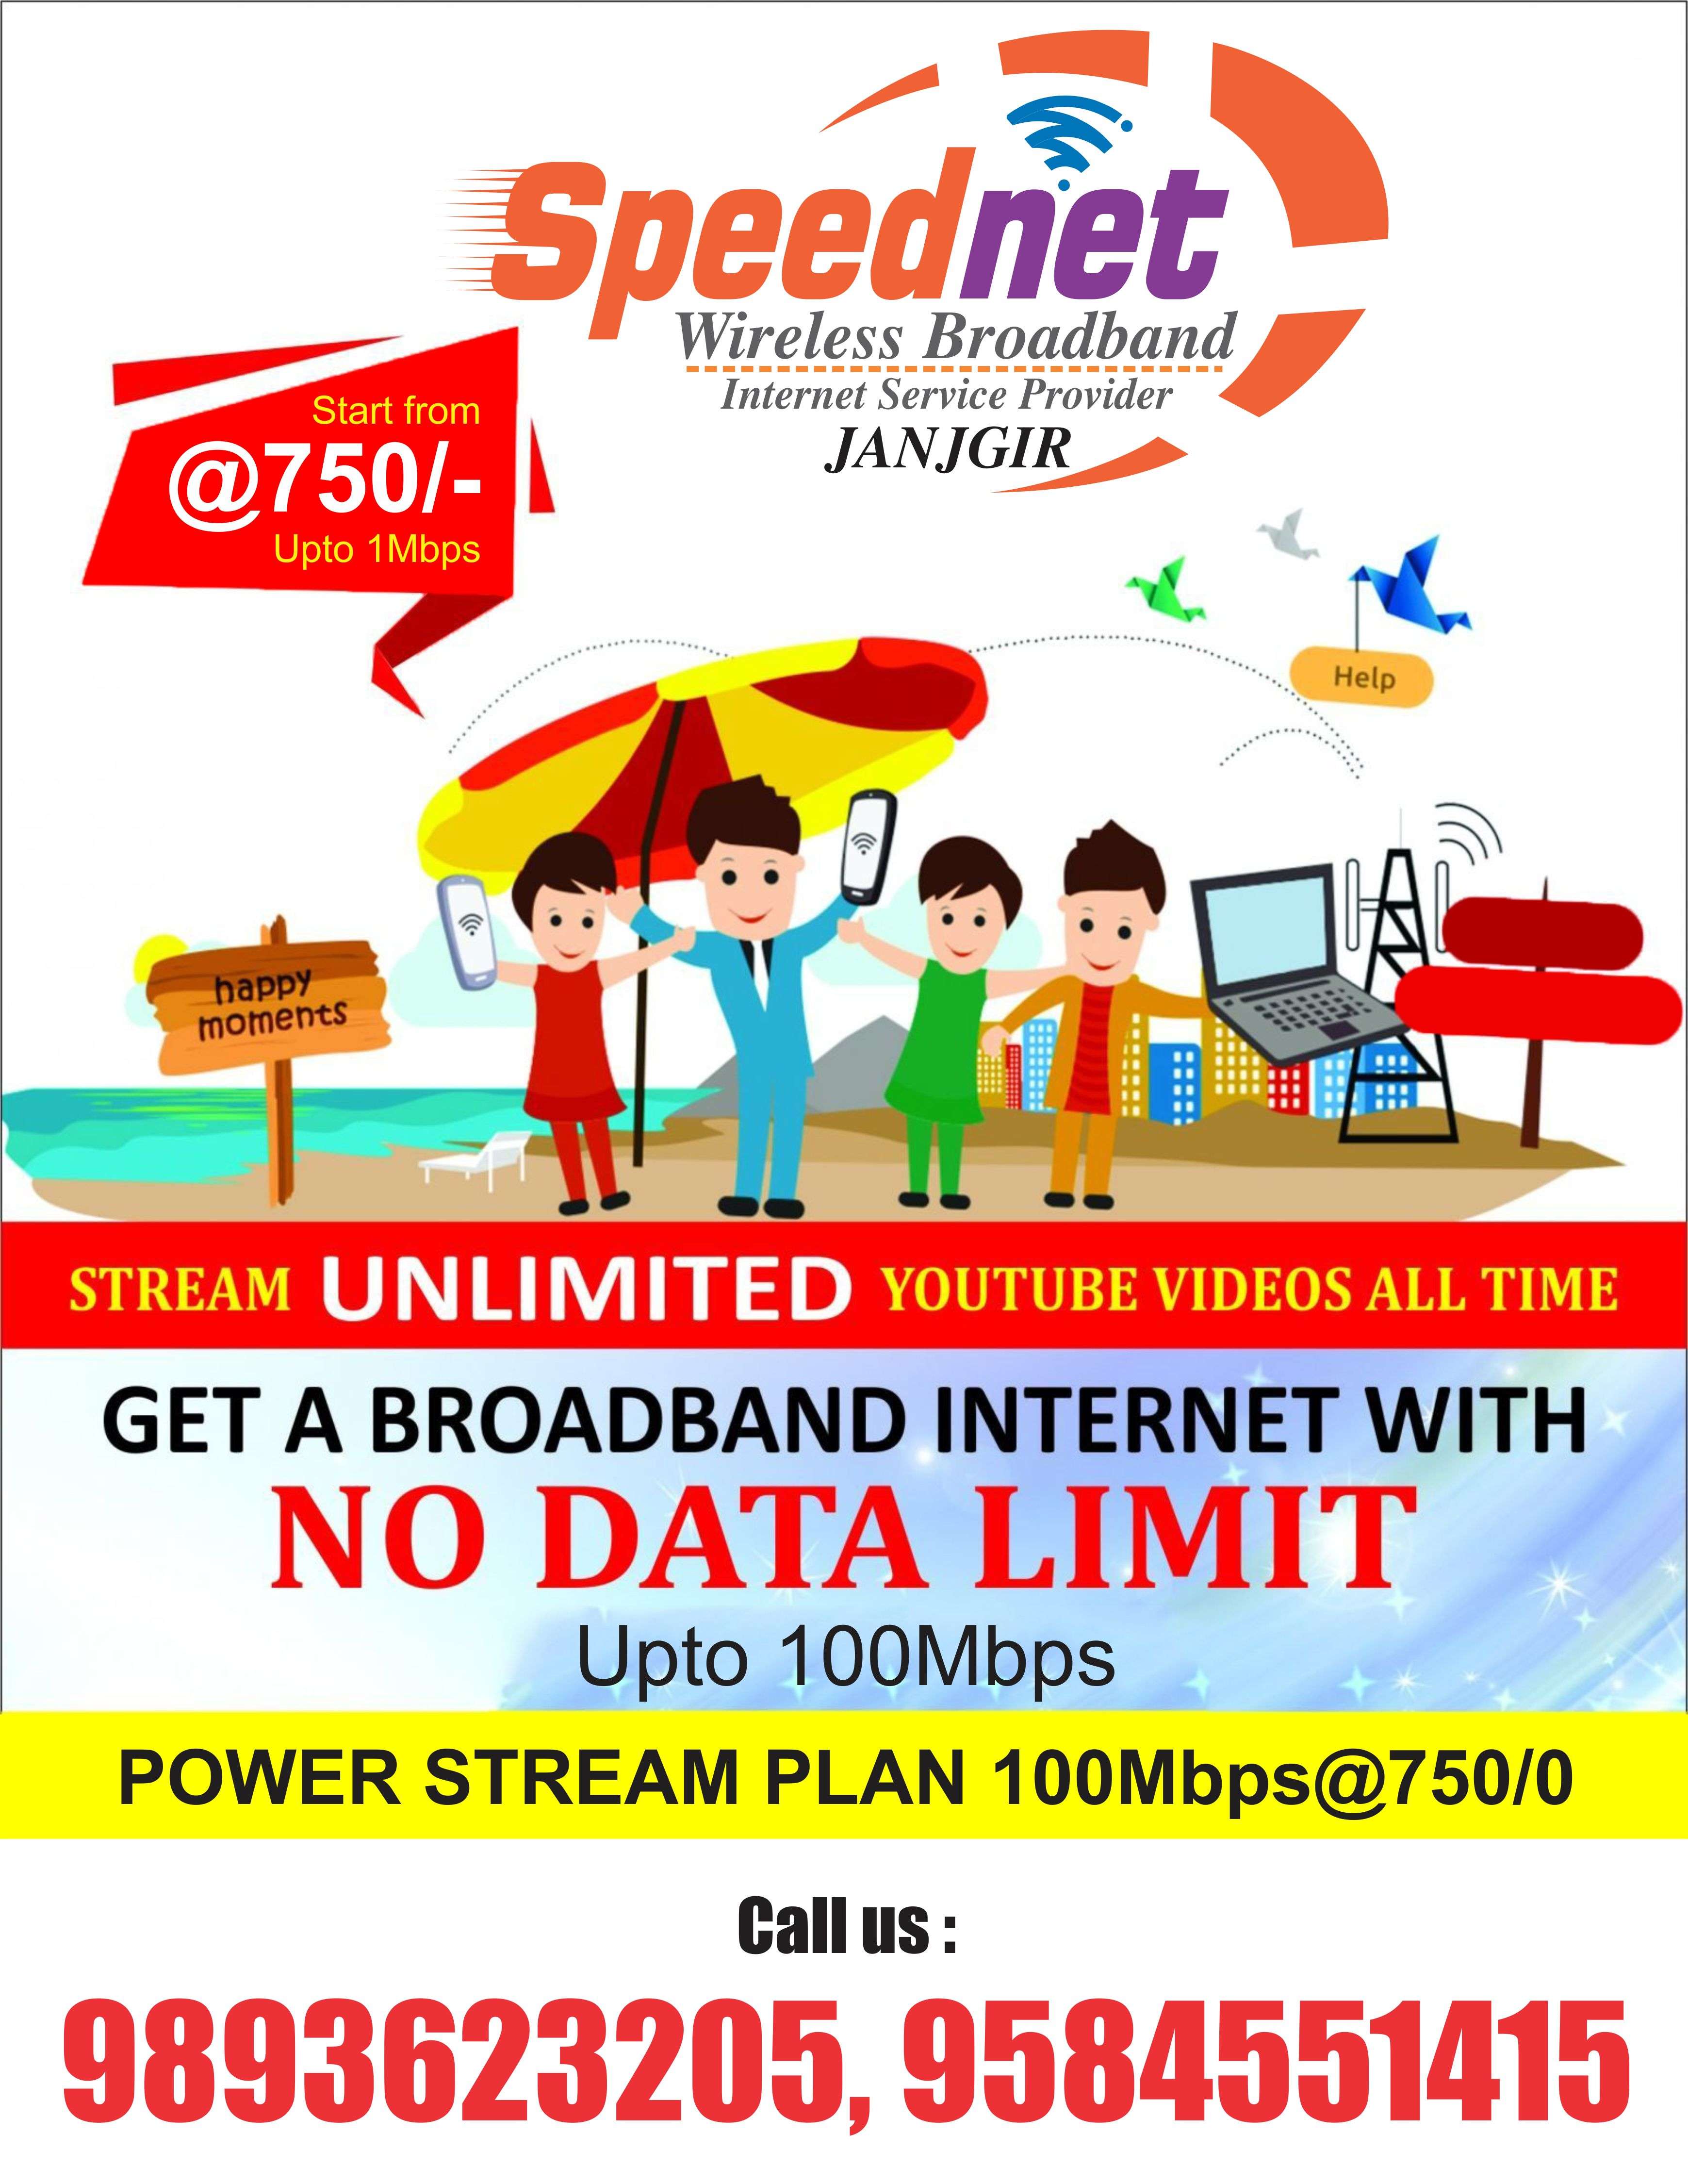 Speednet Wireless Broadband